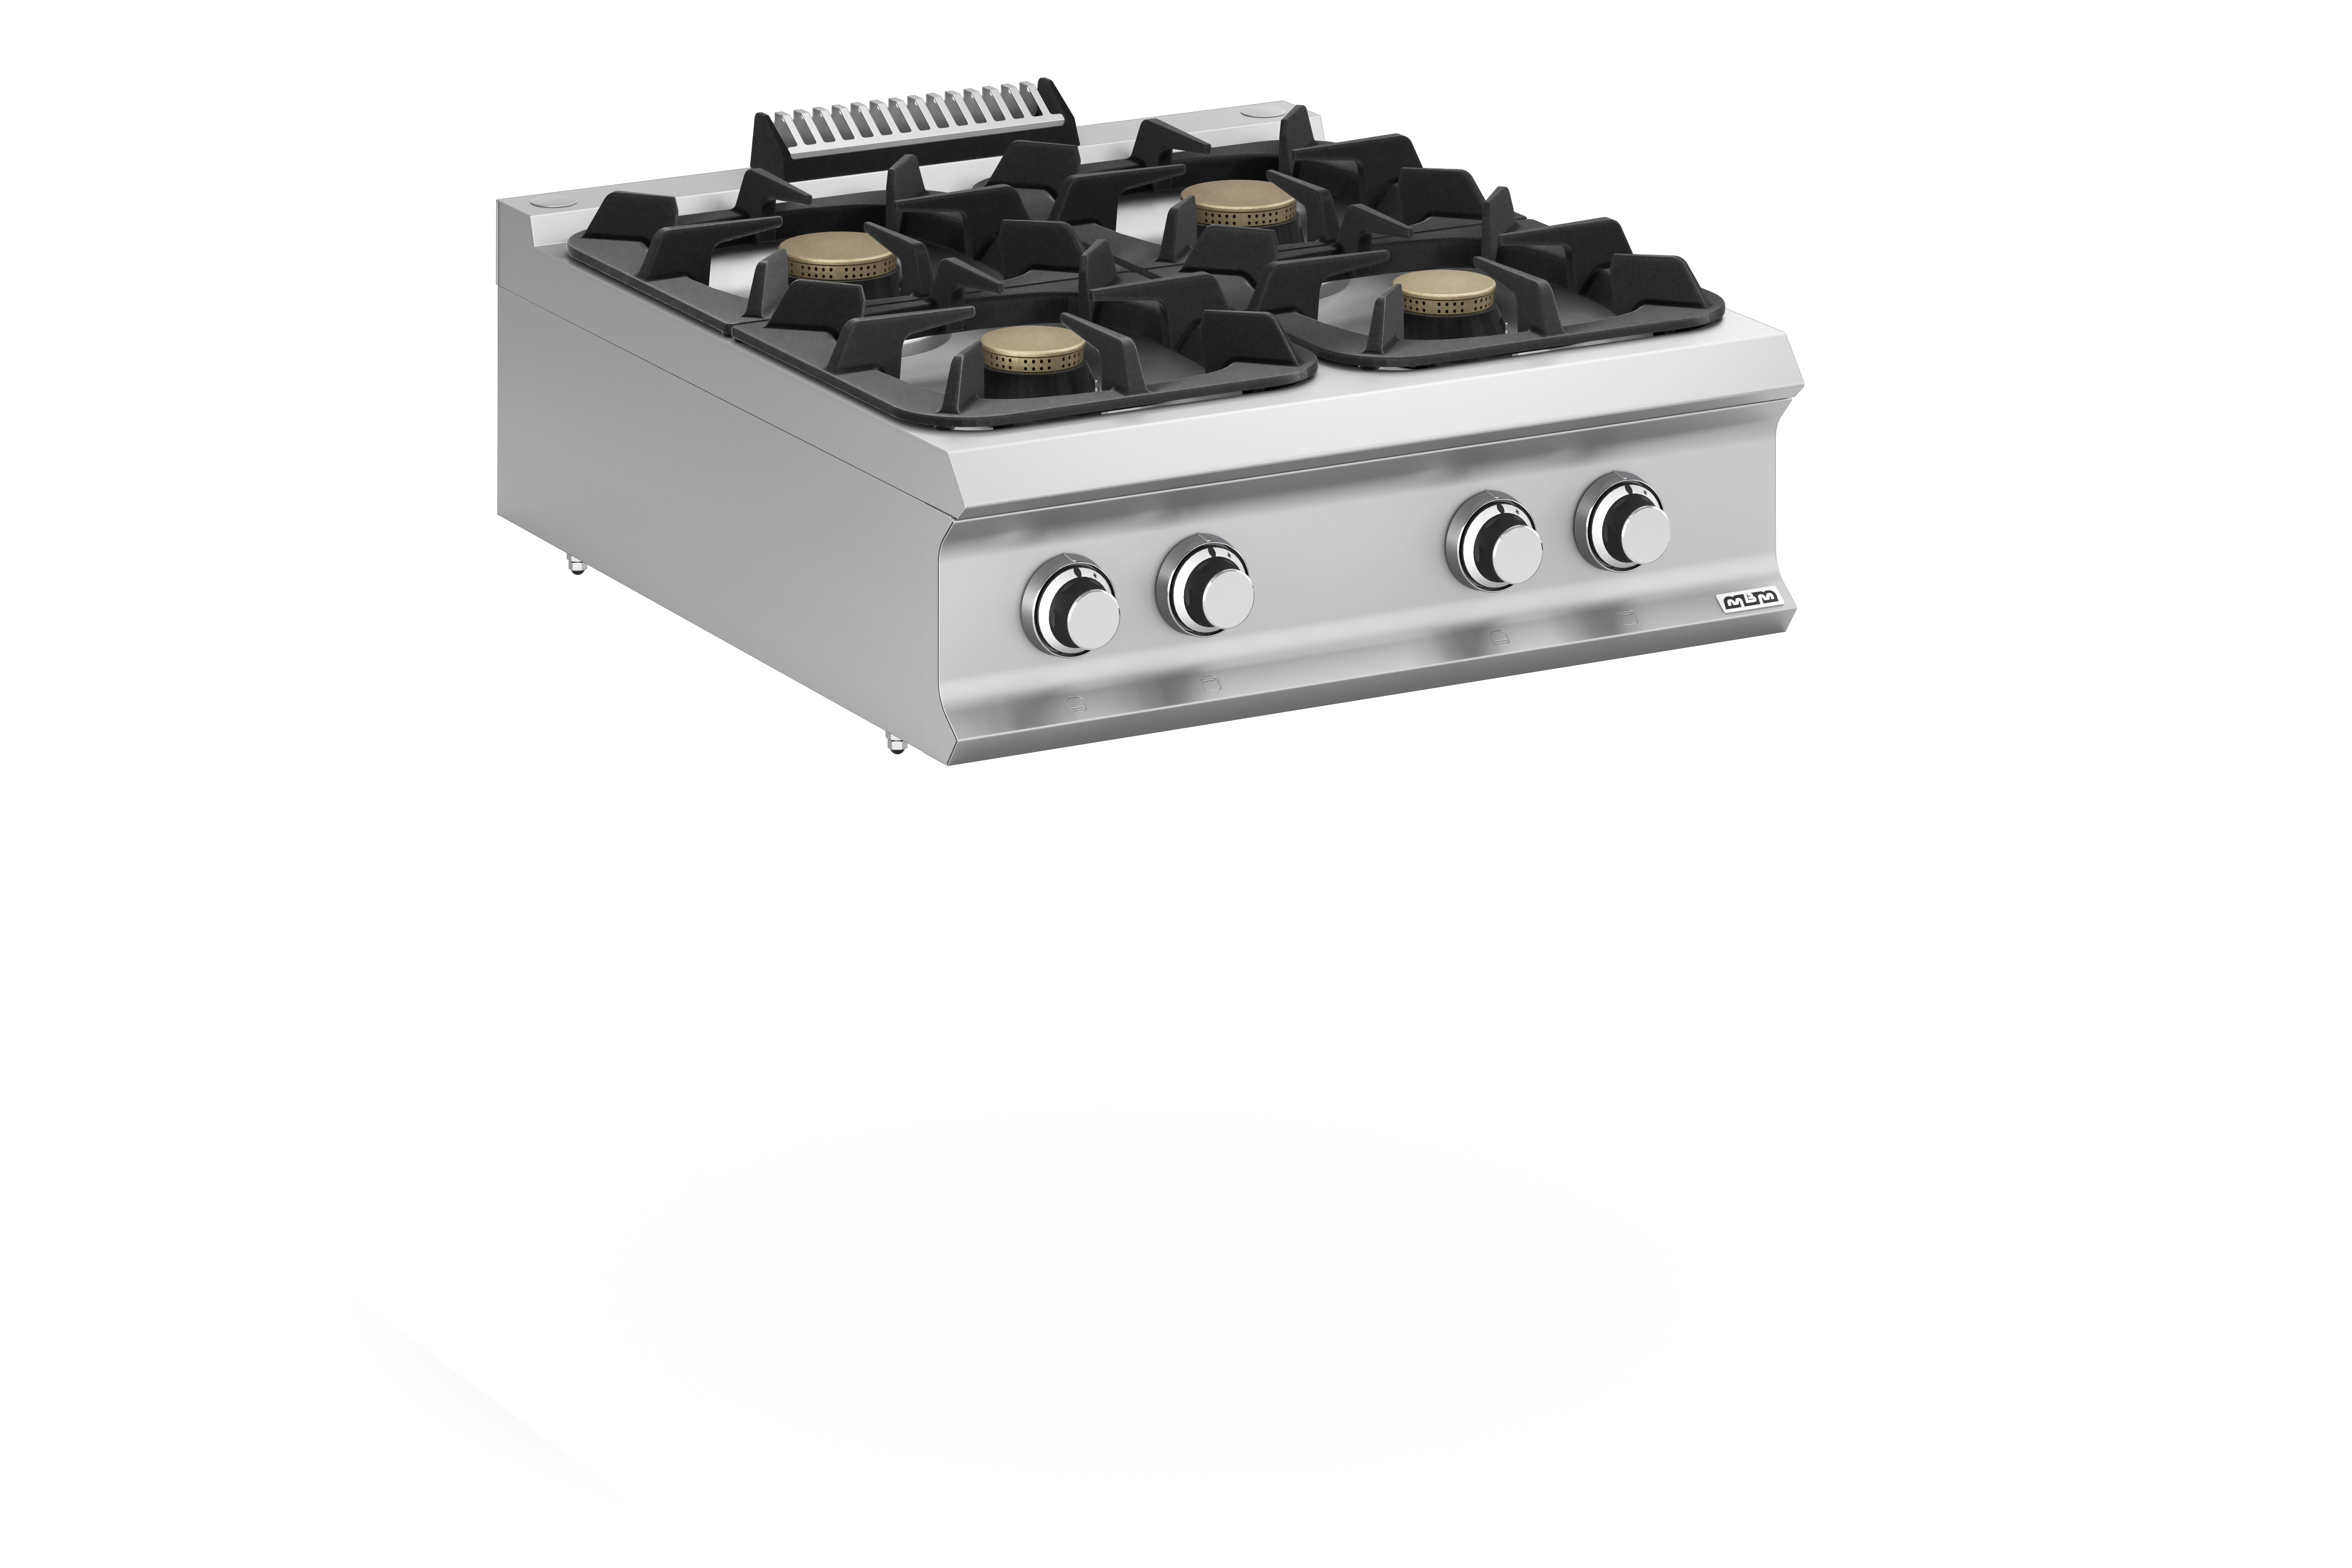 Domina Pro 900 FB98TXXS 4 Powered Burner Countertop Cooker